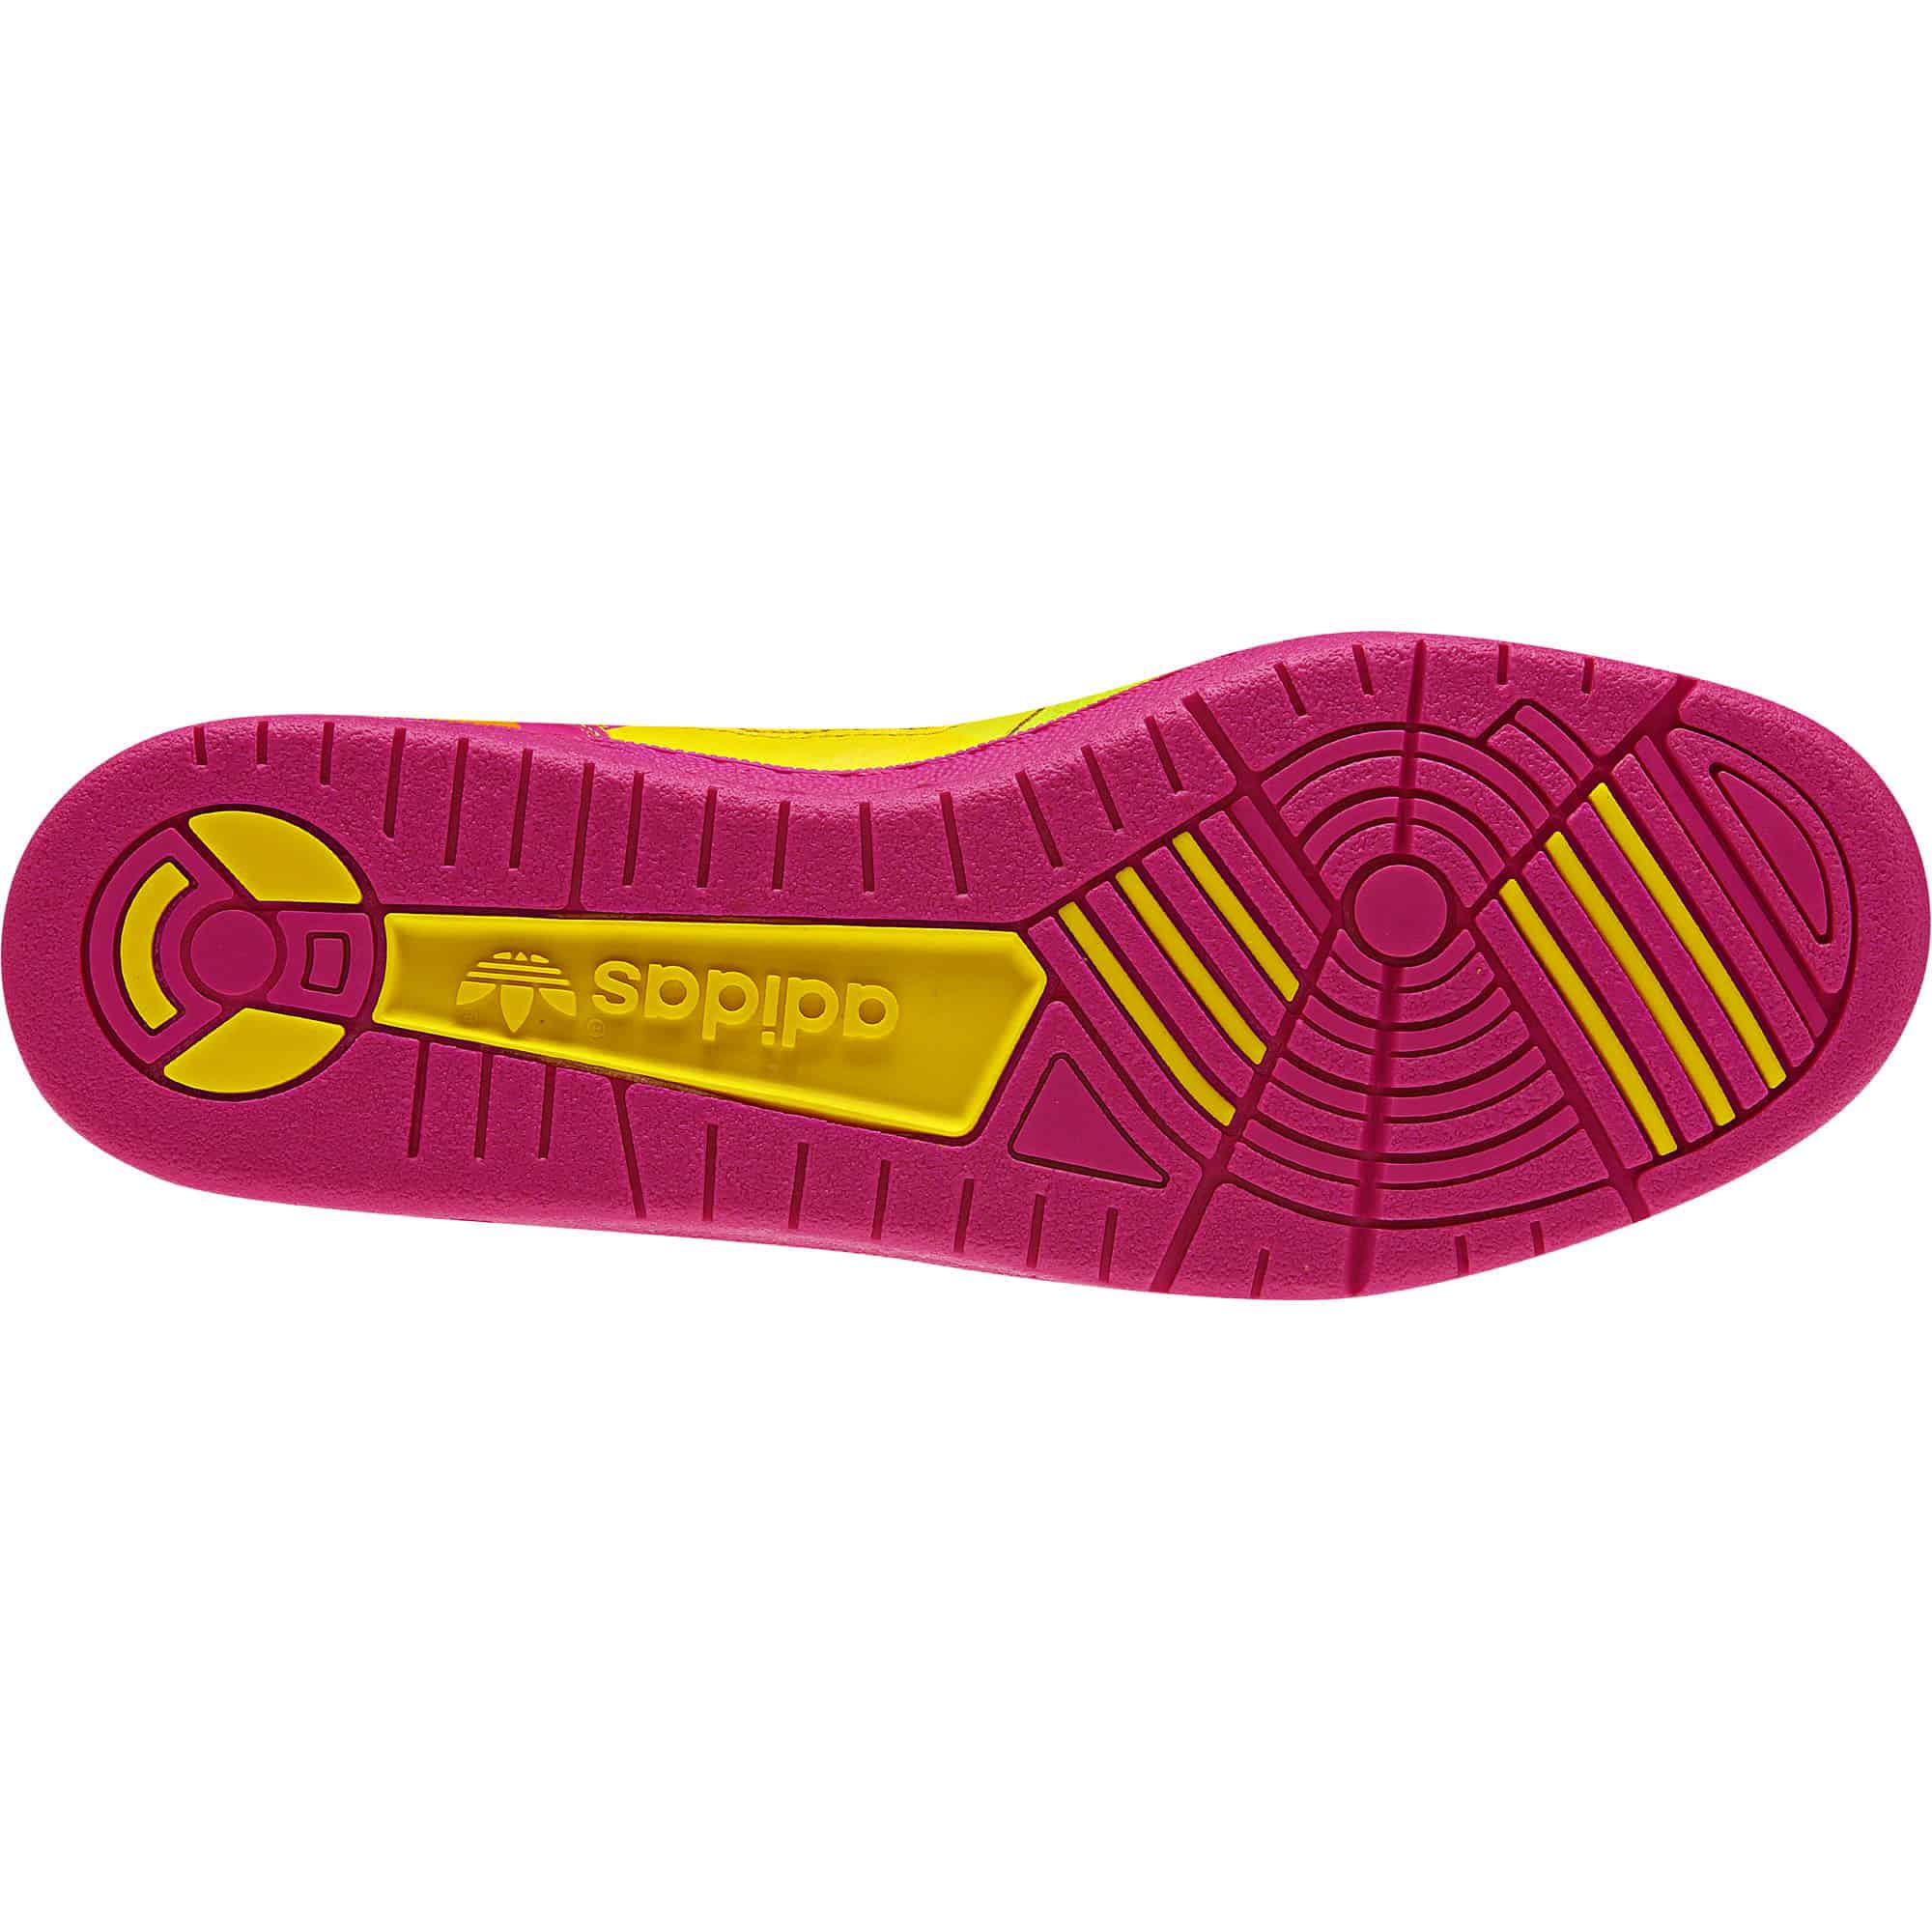 Adidas Mens Jeremy Scott Neon Camo Pink Rubber Shoes